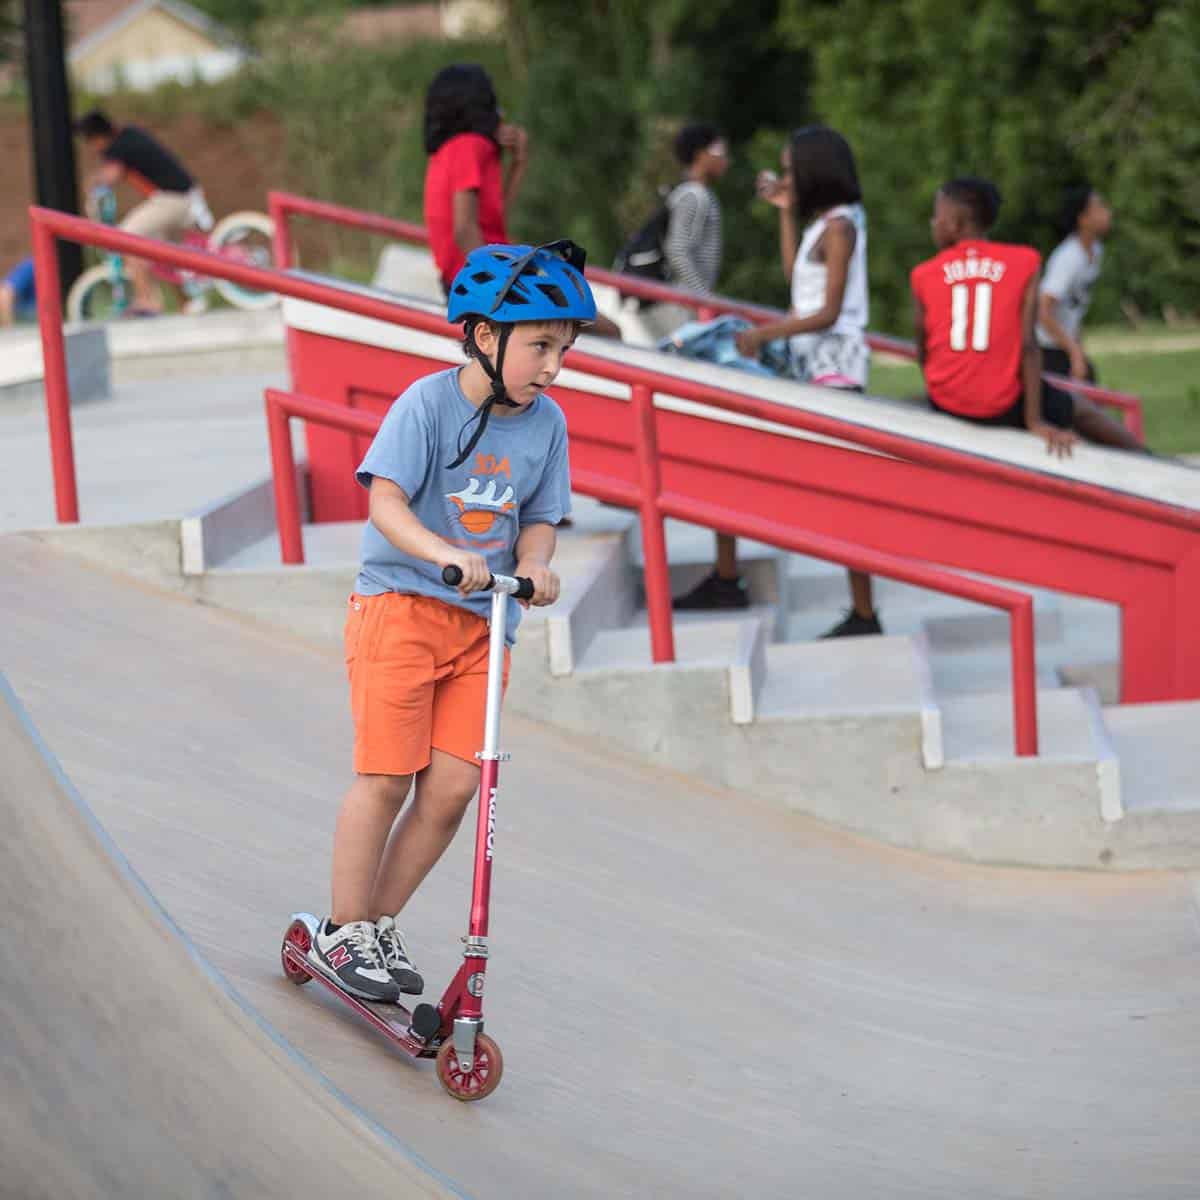 southbend-park-scooter-kids-playground-skating-1x1-visit-lagrange